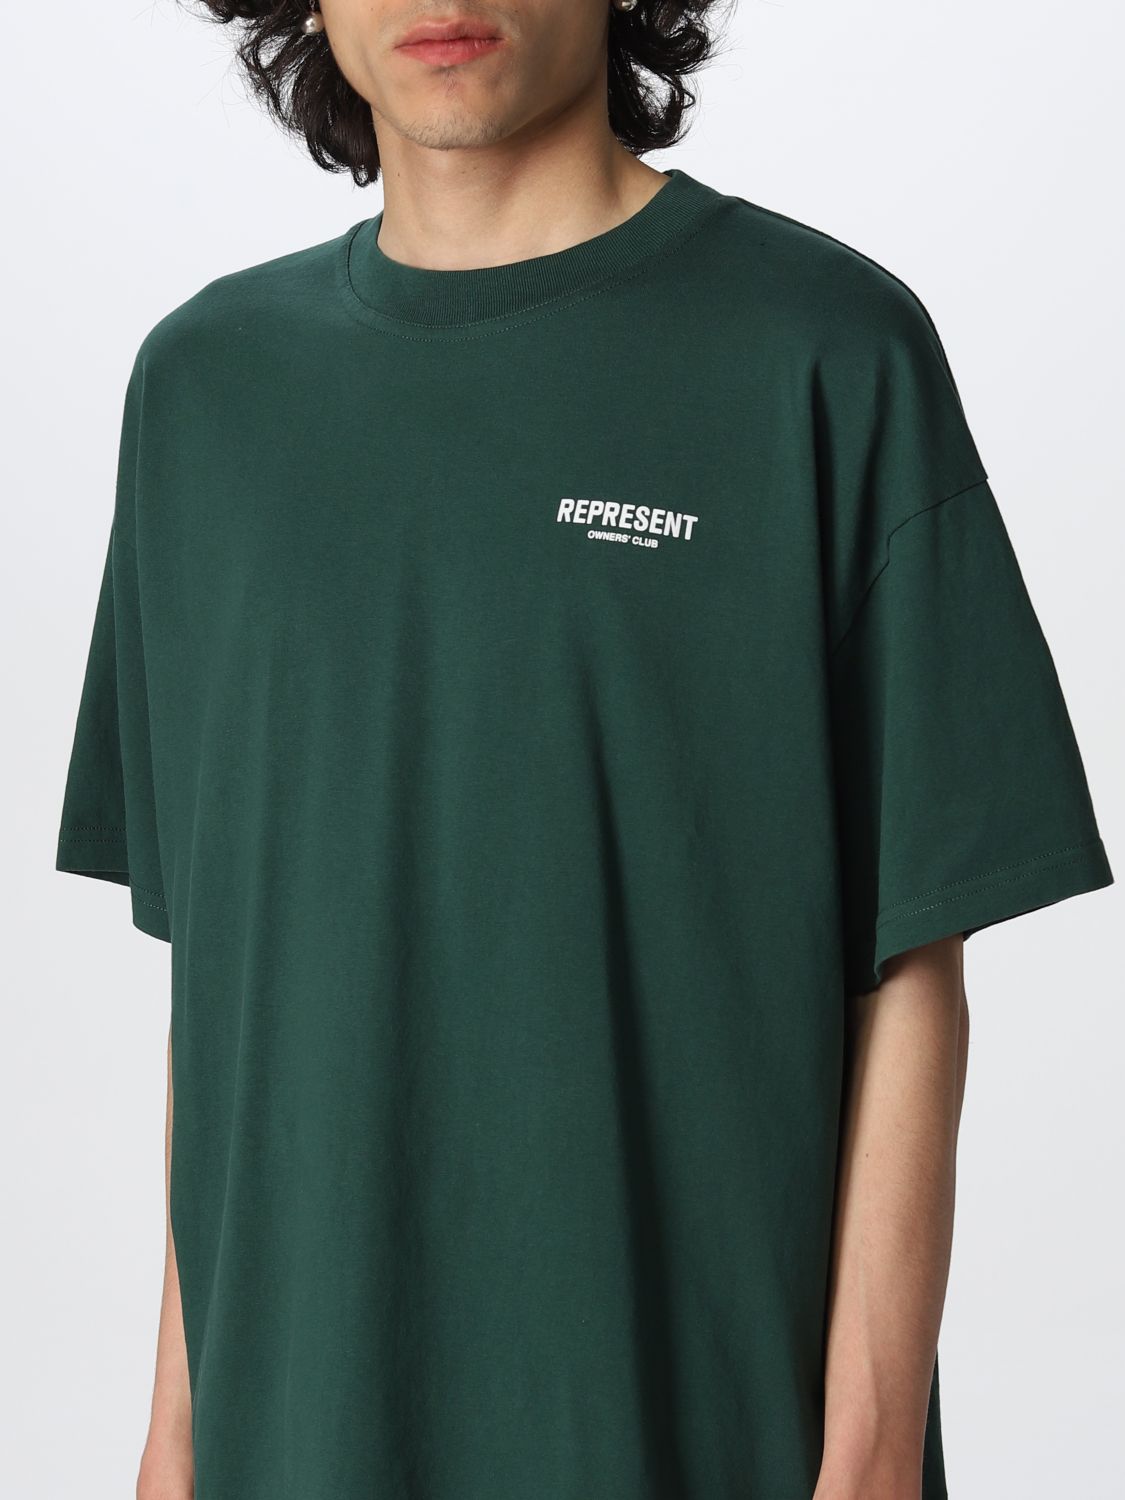 Tシャツ Represent: Tシャツ メンズ Represent グリーン 3